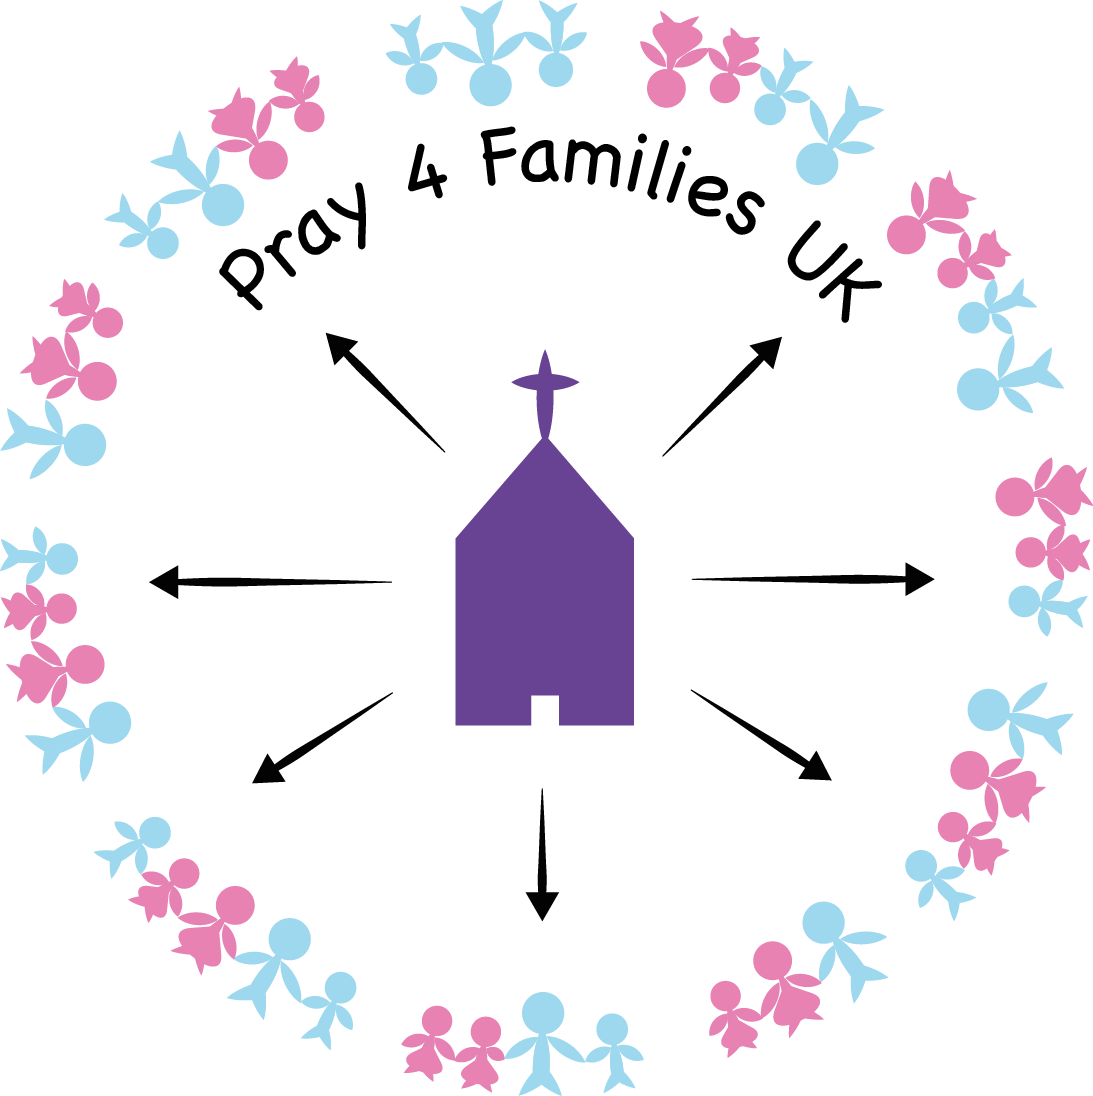 pray 4 families